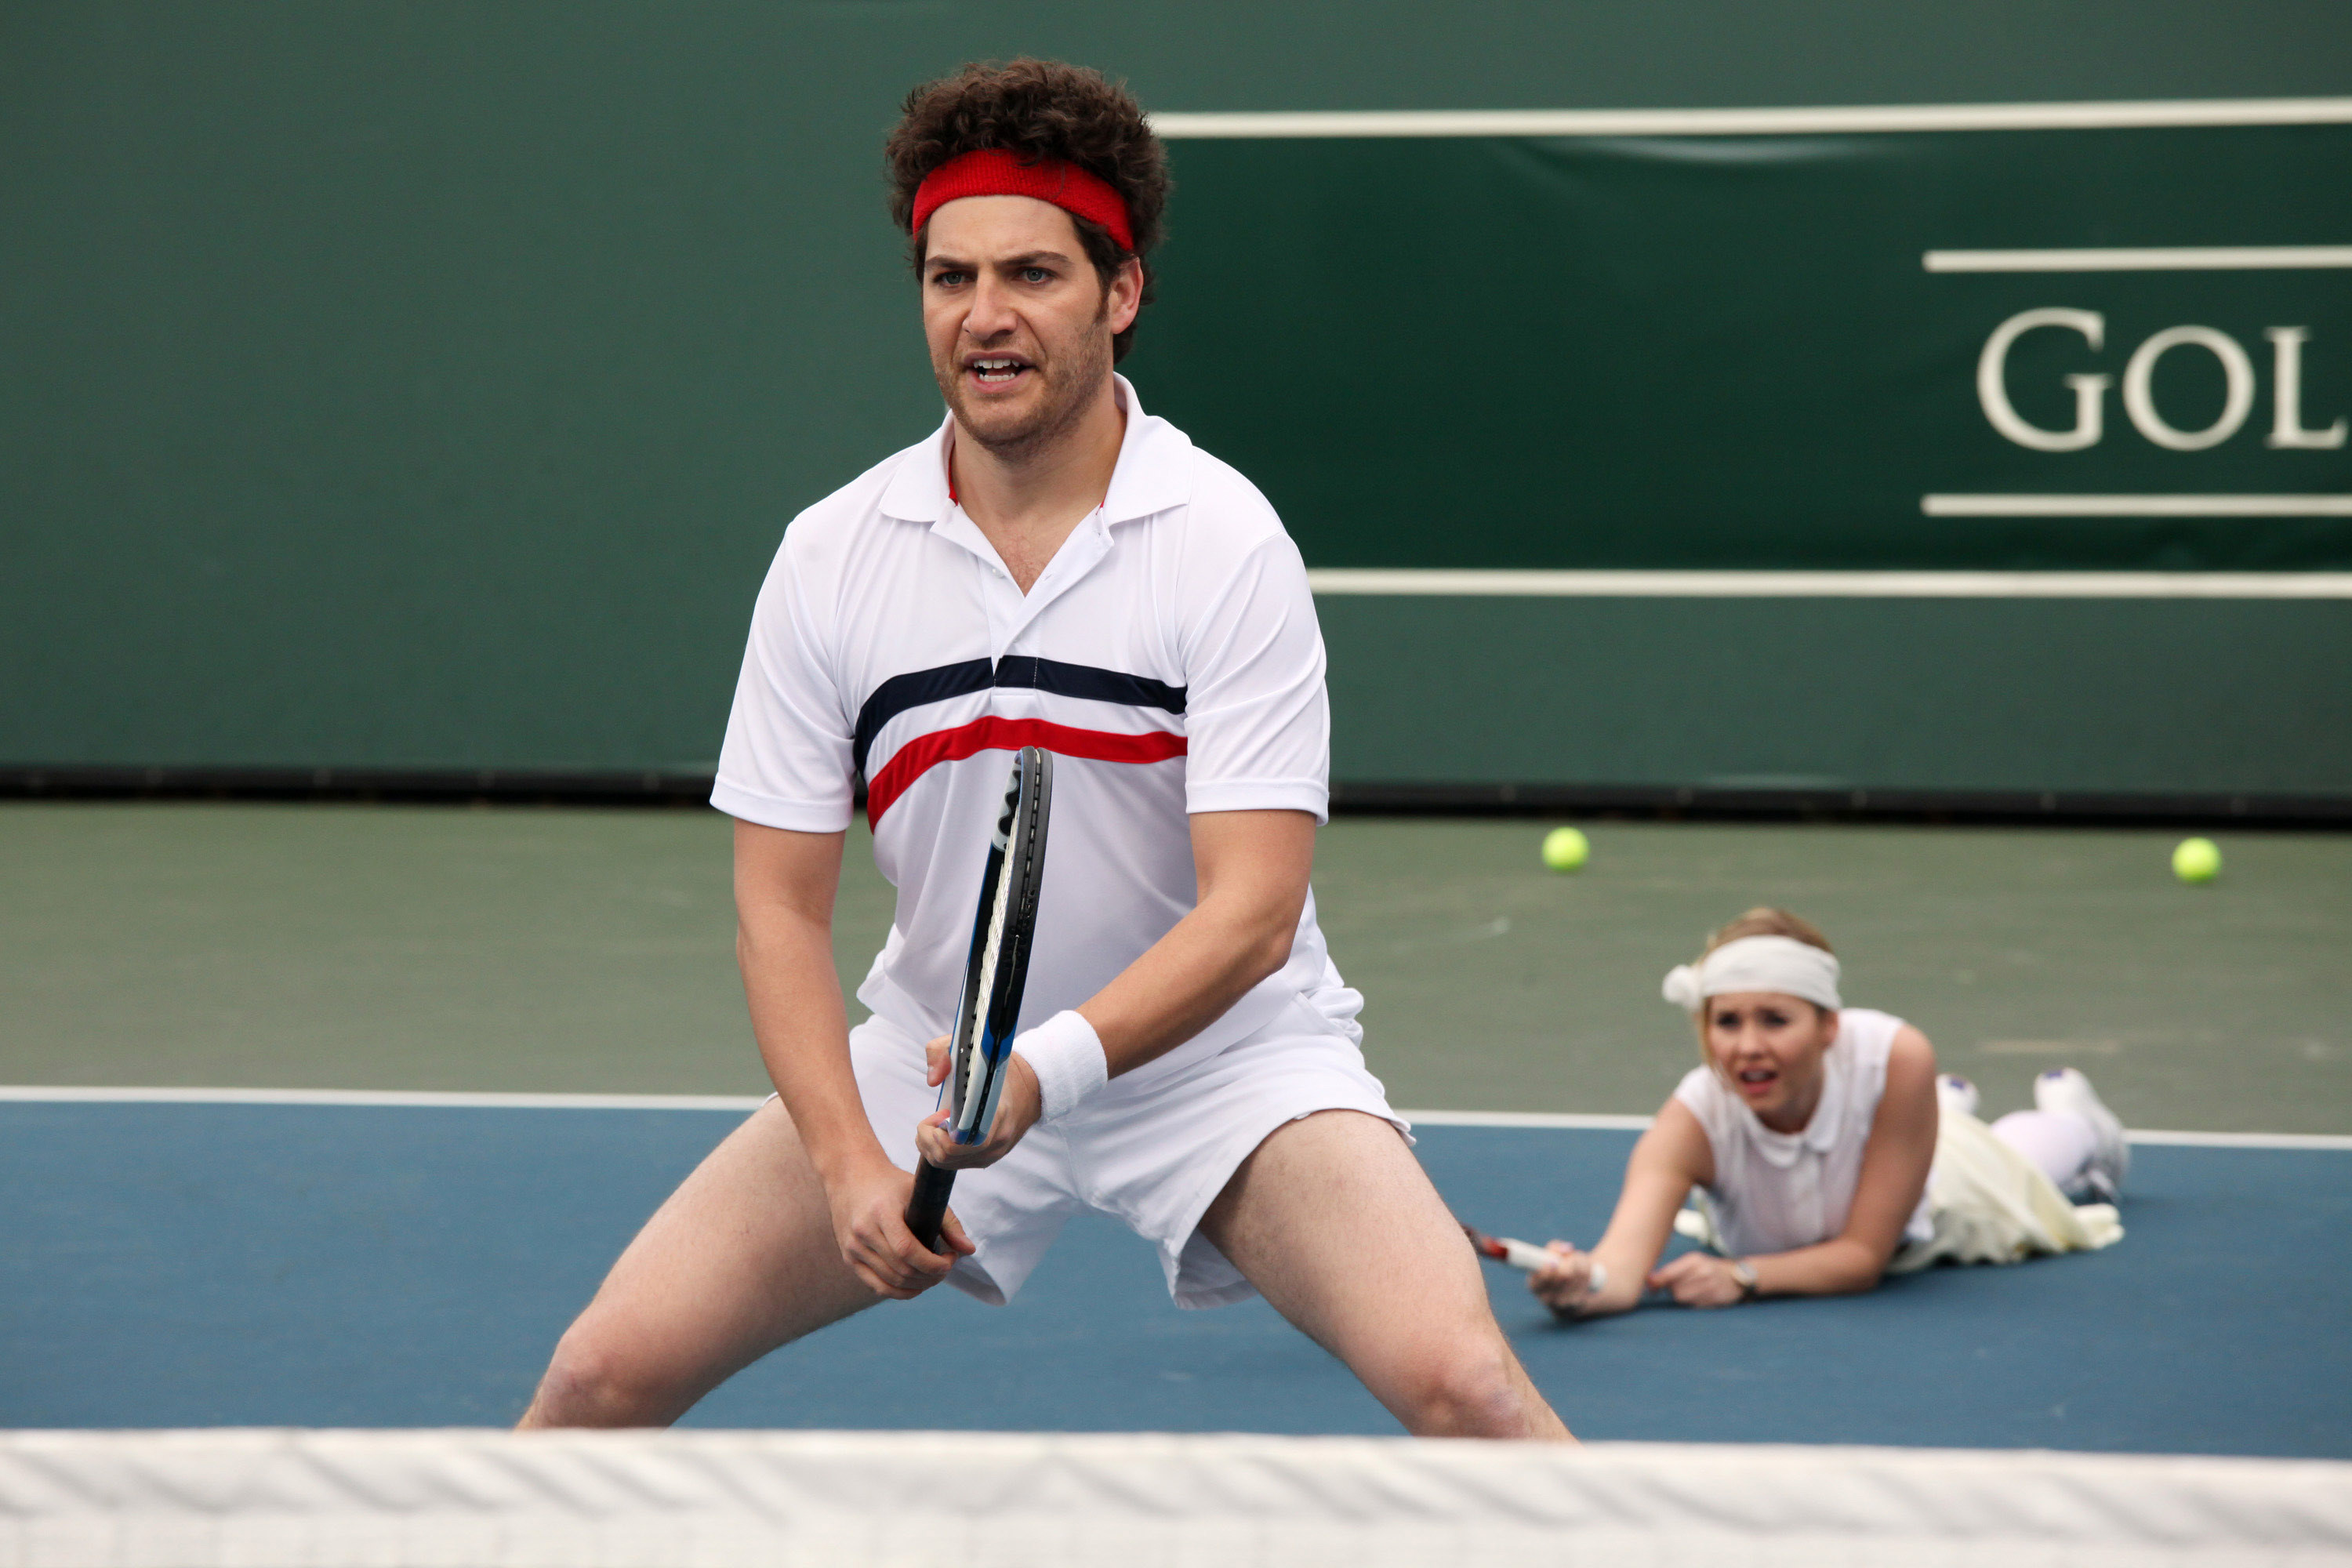 Adam Pally plays tennis with Elisha Cuthbert on the ground behind him